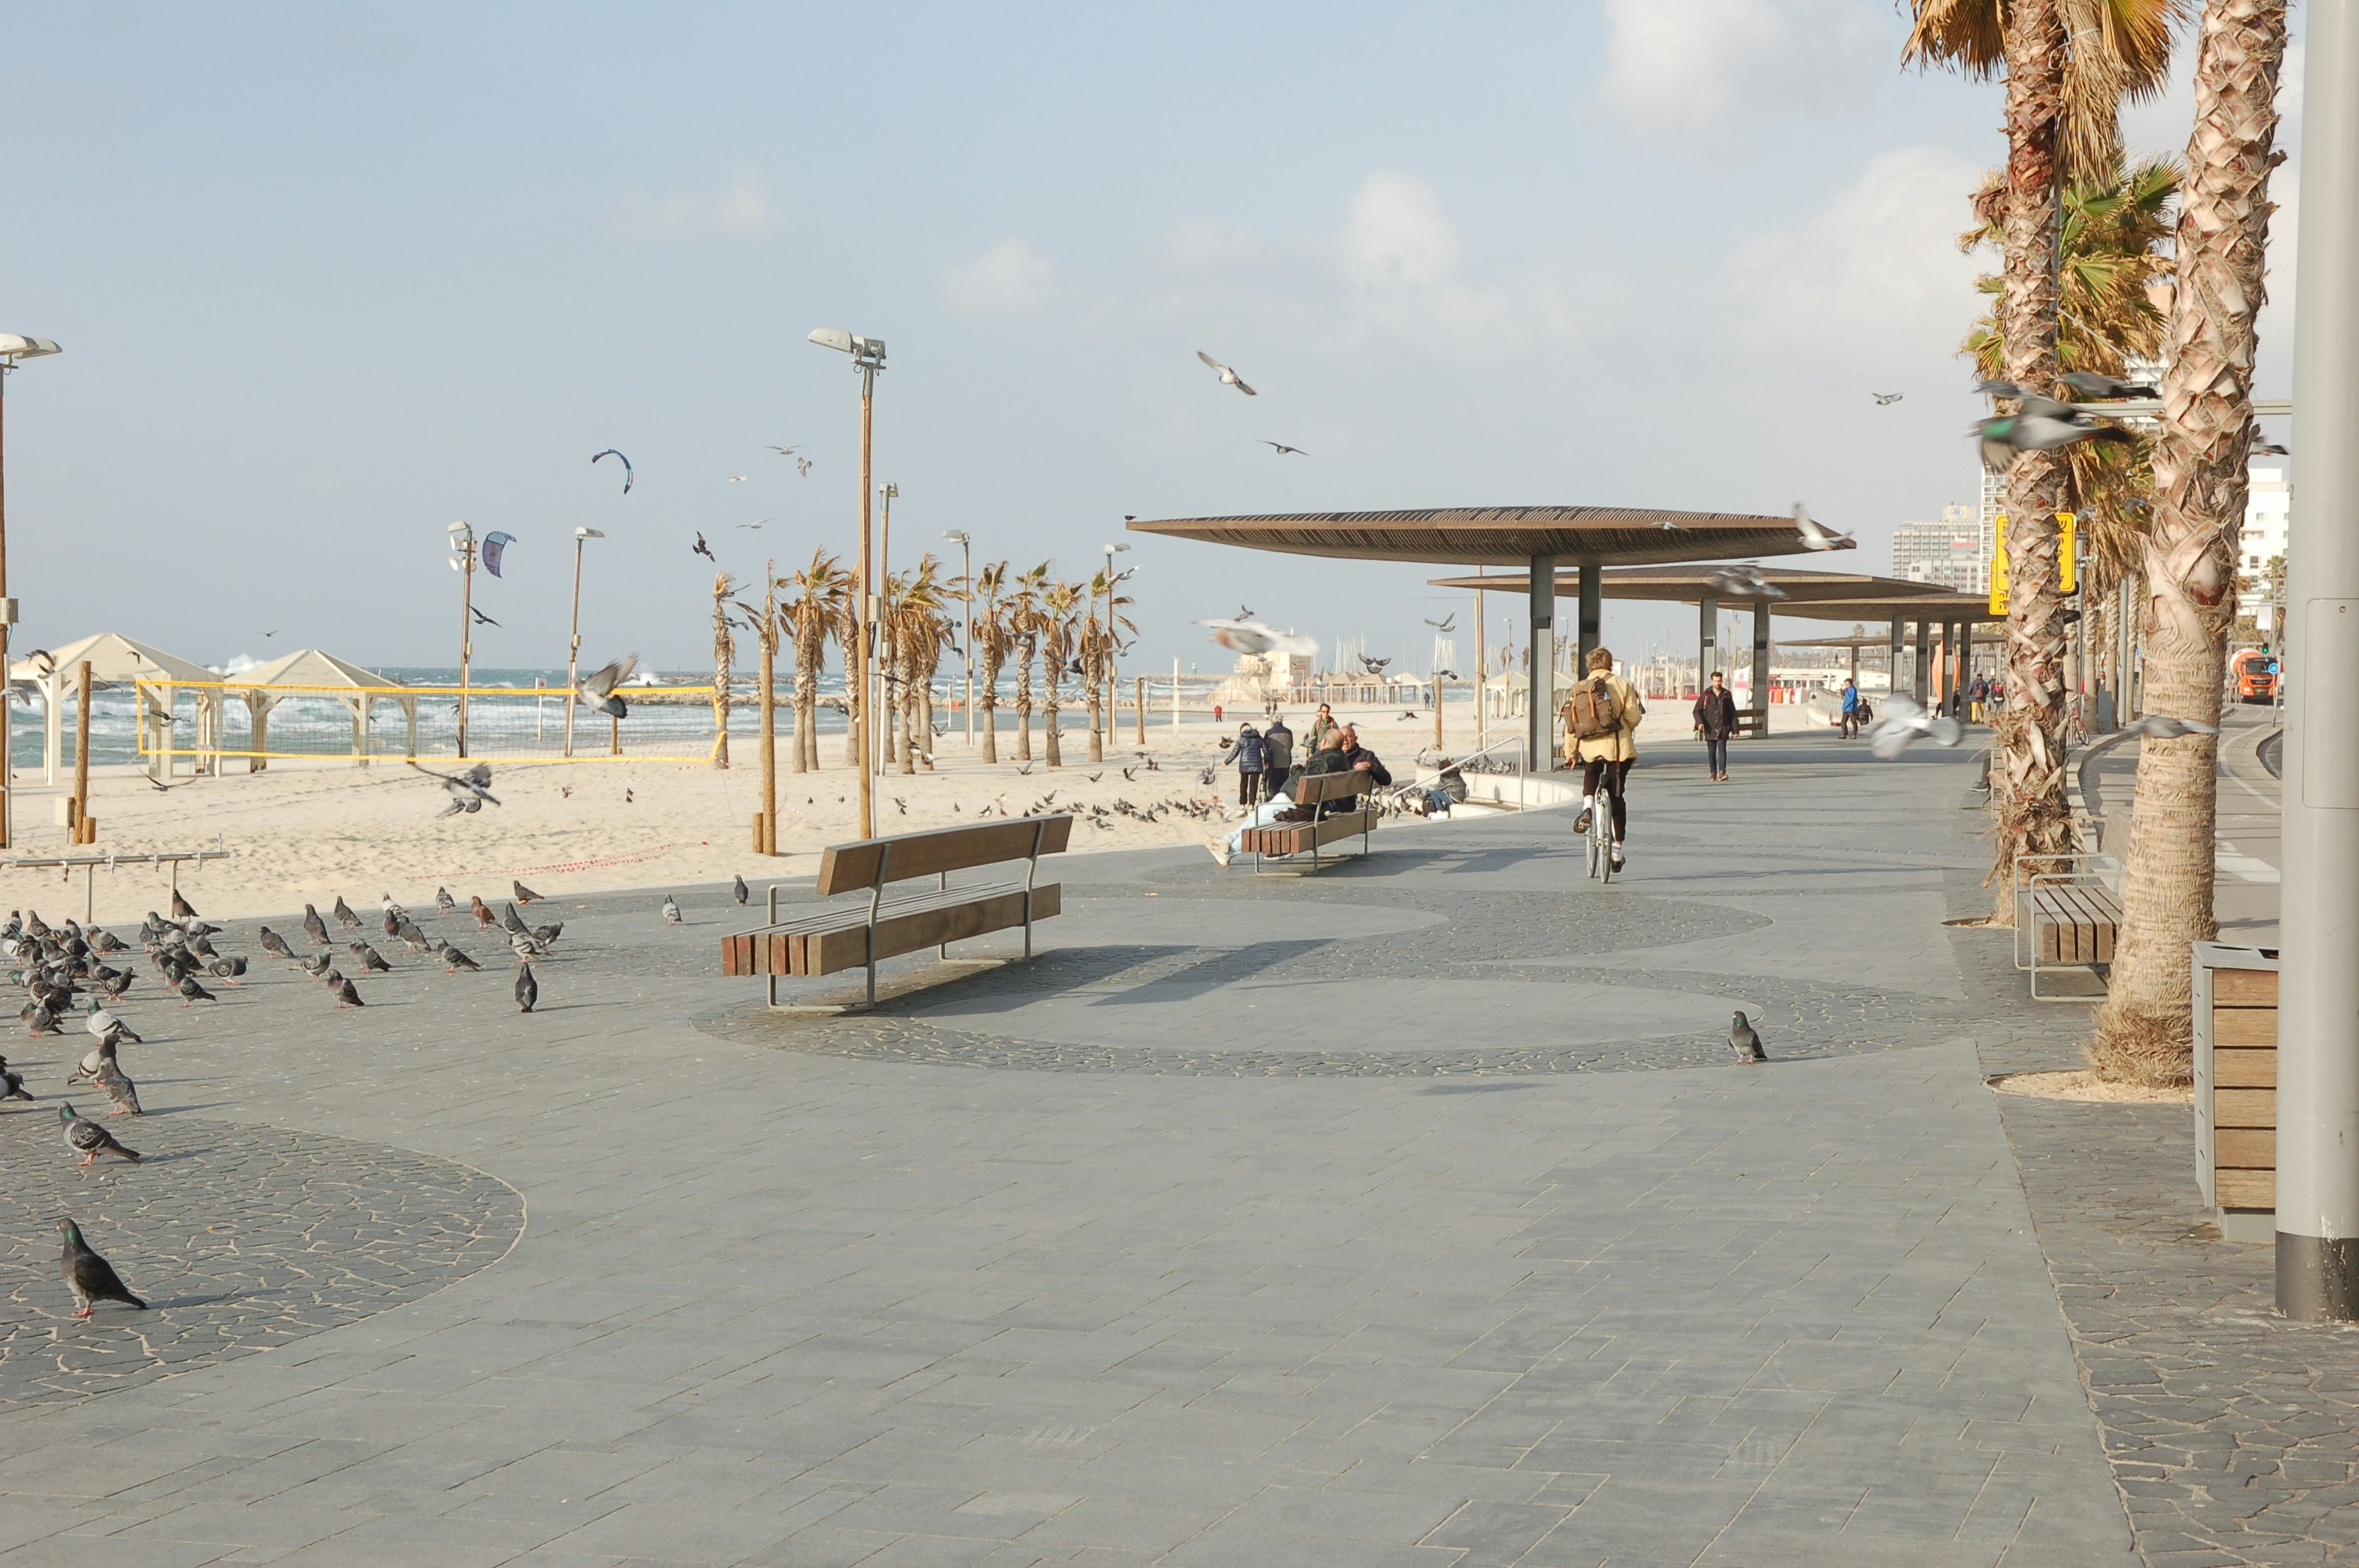 Tel Aviv Boardwalk